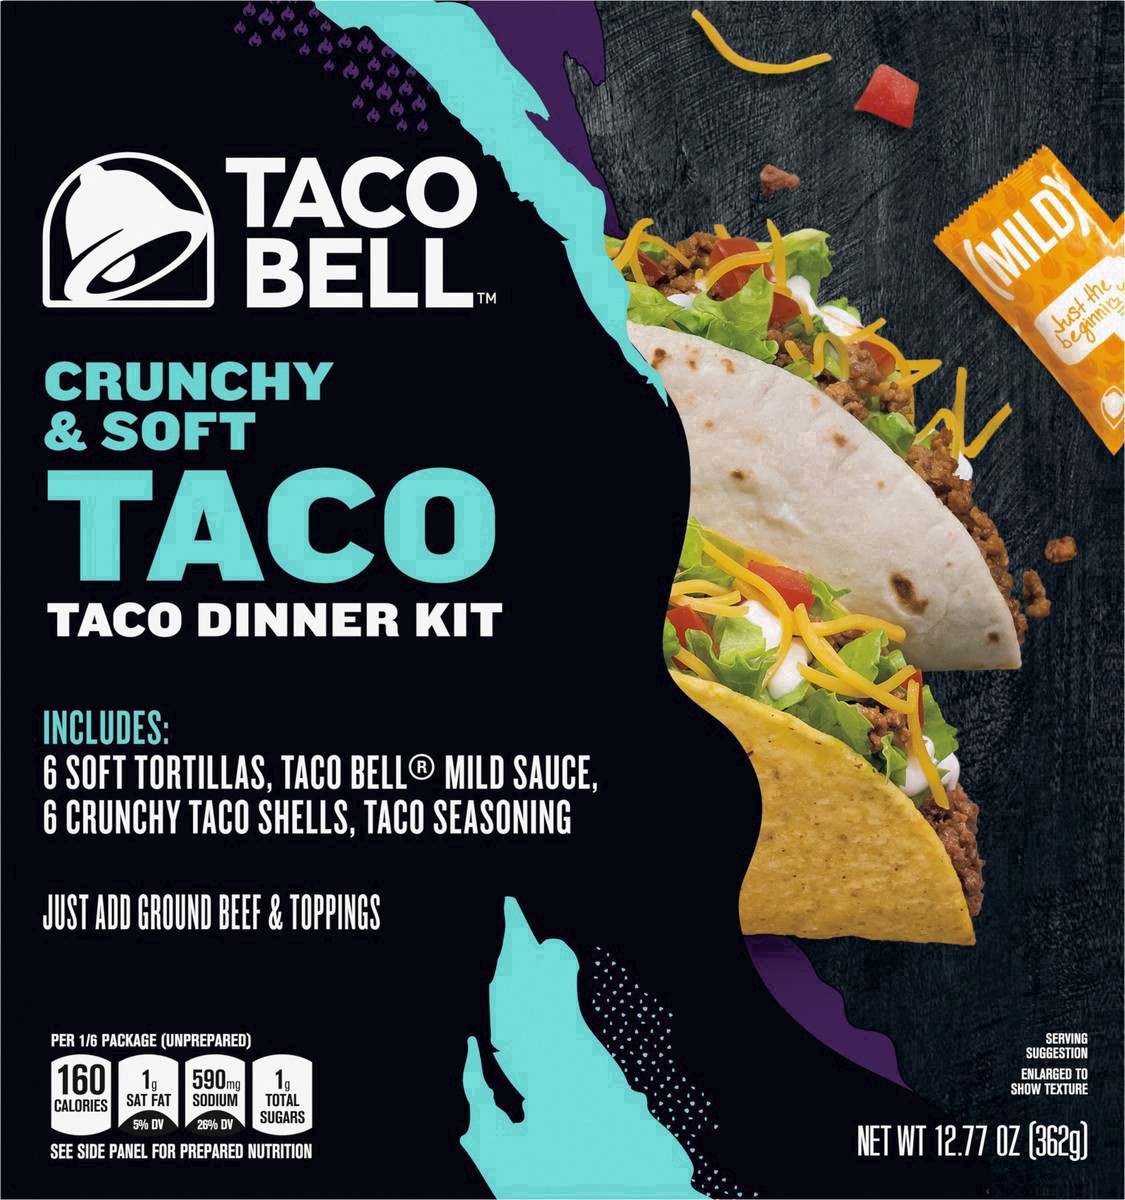 slide 48 of 101, Taco Bell Crunchy & Soft Taco Cravings Kit with 6 Soft Tortillas, 6 Crunchy Taco Shells, Taco Bell Mild Sauce & Seasoning, 12.77 oz Box, 1 ct